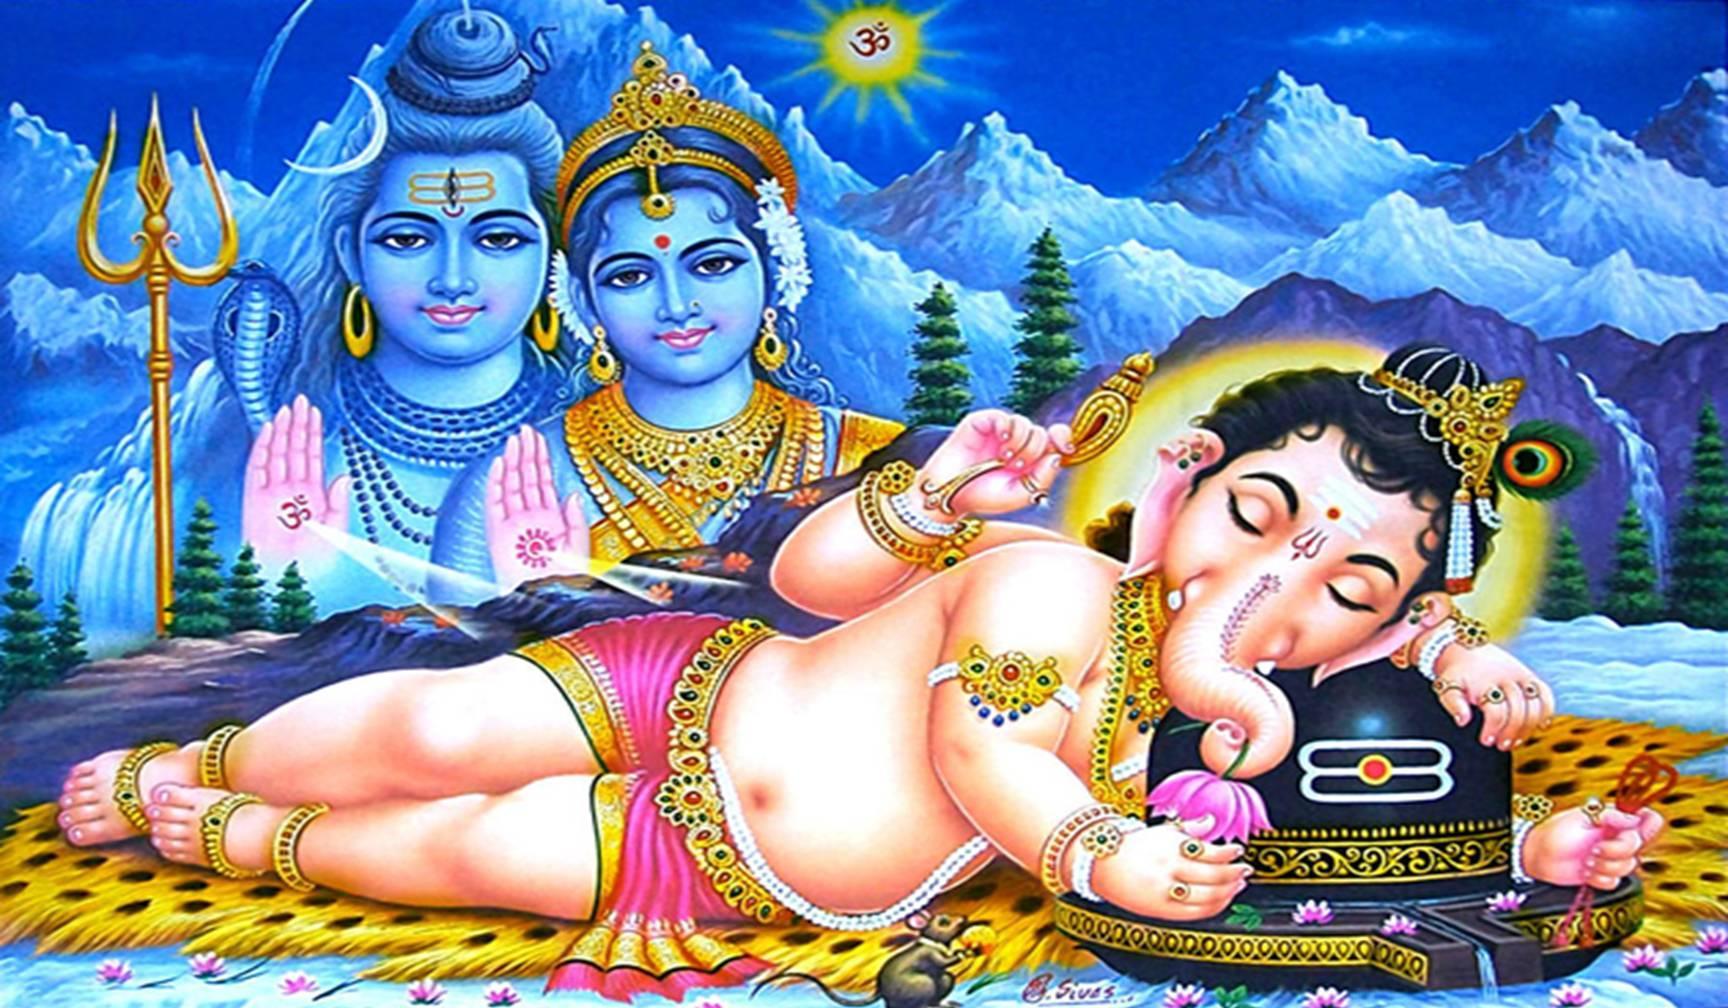 Bhole Baba Ke Bhajan: The Erotic Art of Worship